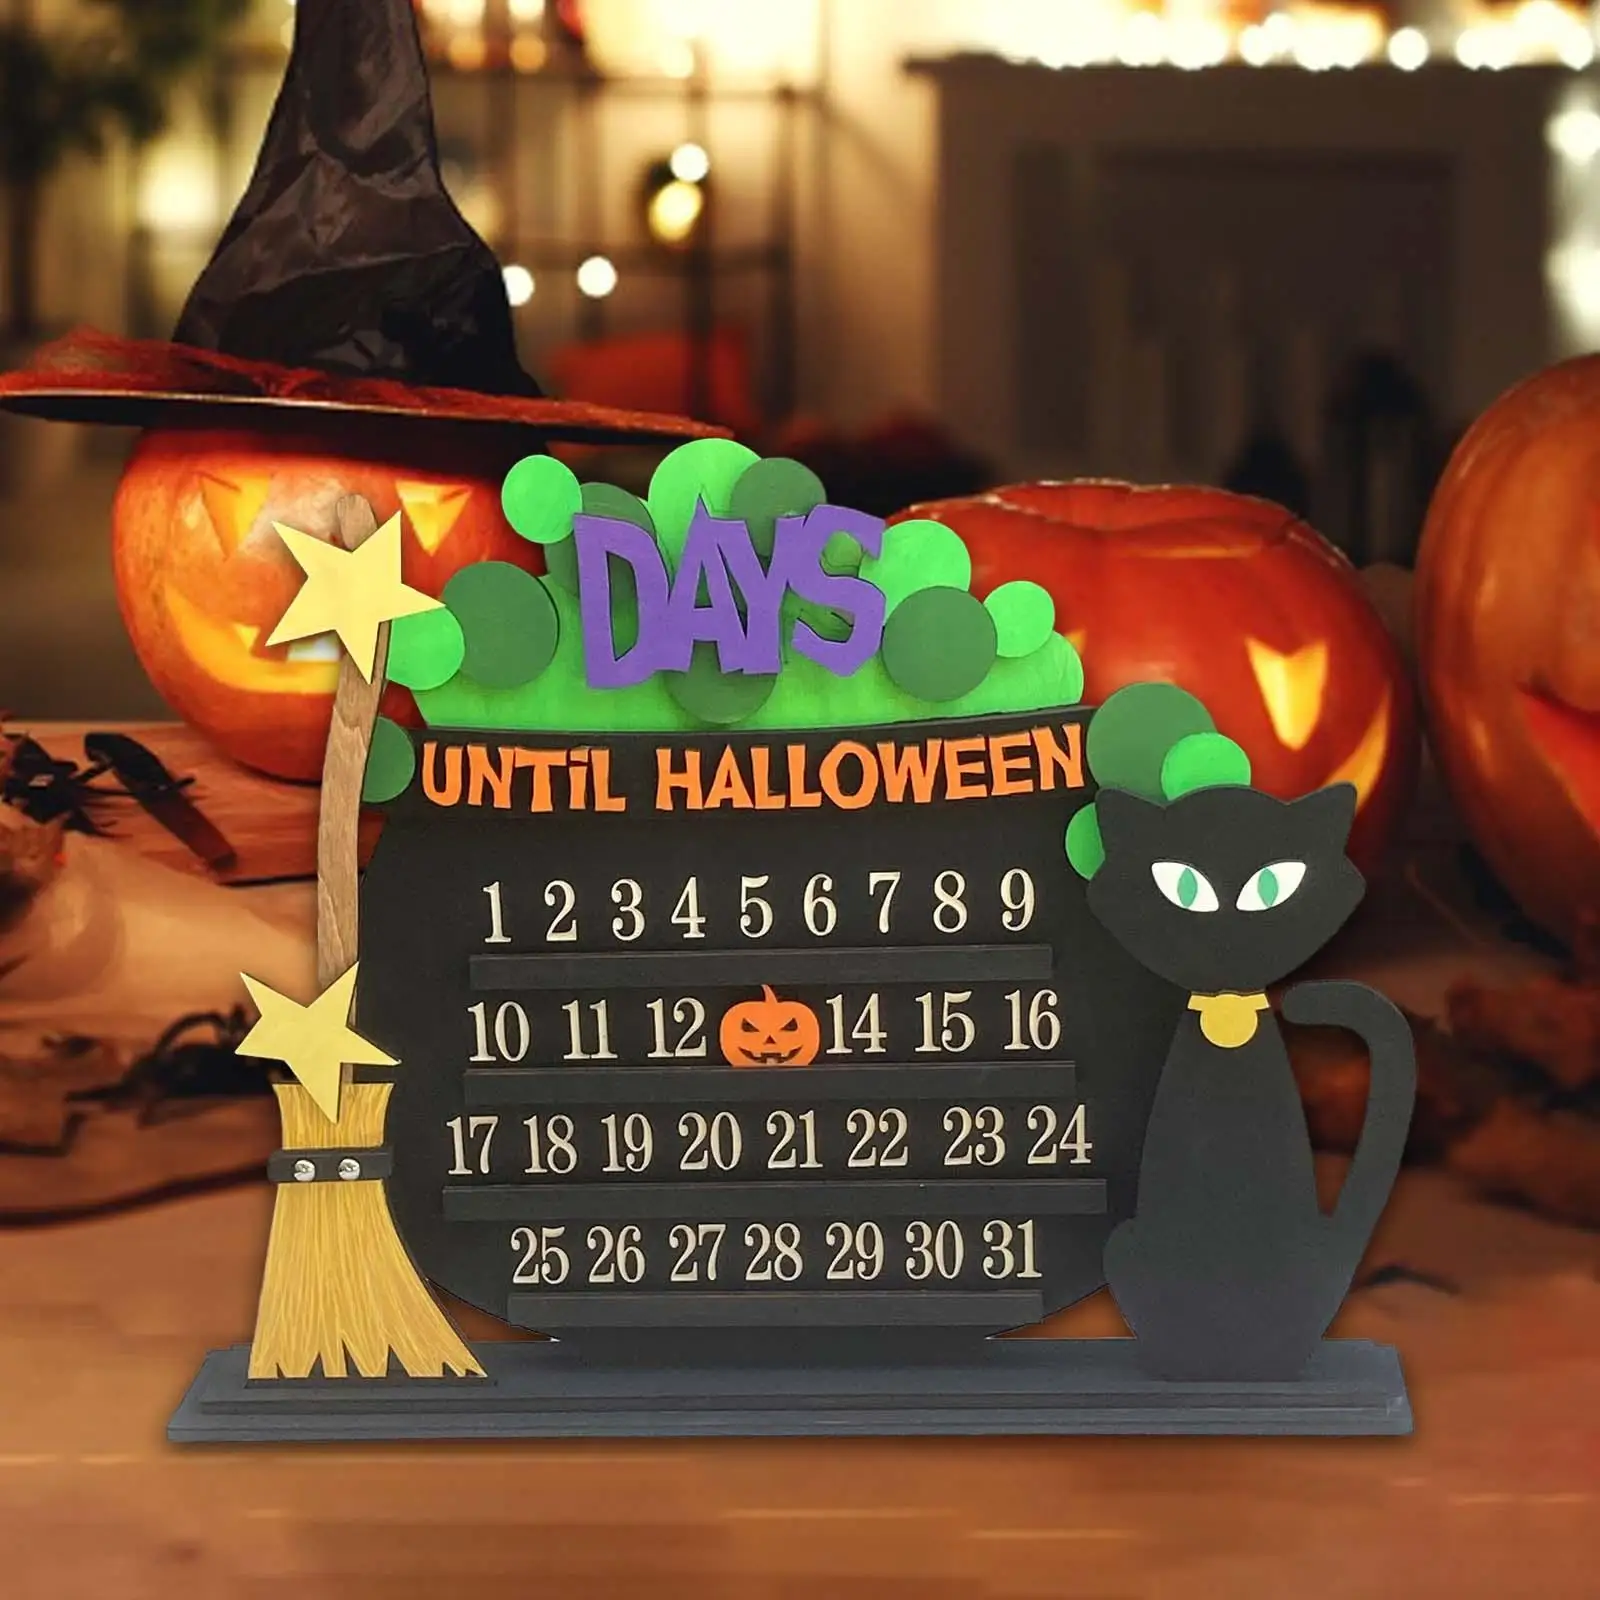 Wooden Halloween Advent Countdown Calendar Table Decorations Convenient Assemble Cute Patterns Handicrafts for Home Classroom